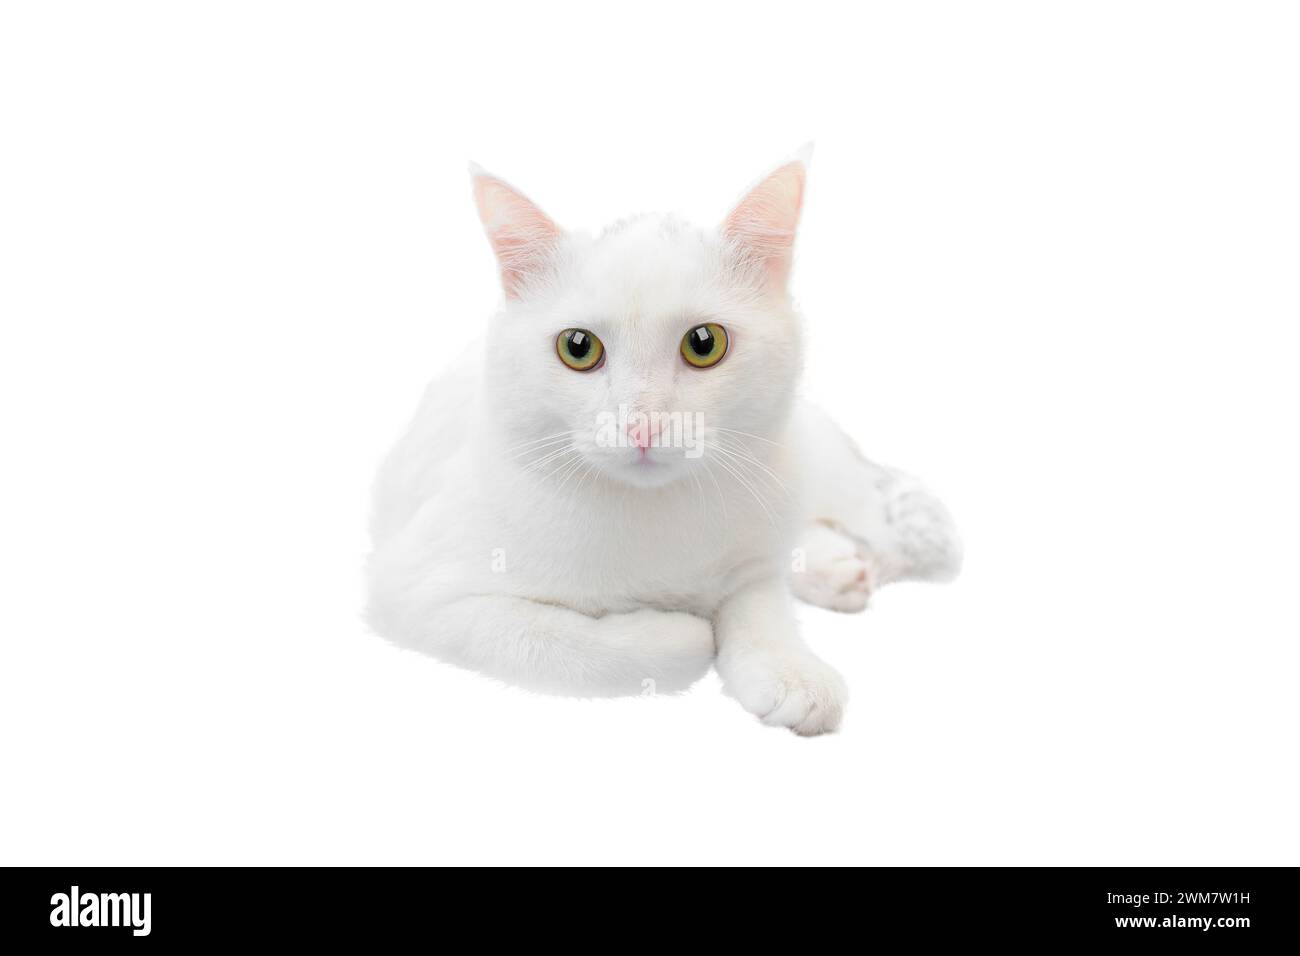 white cat lies on a white background Stock Photo